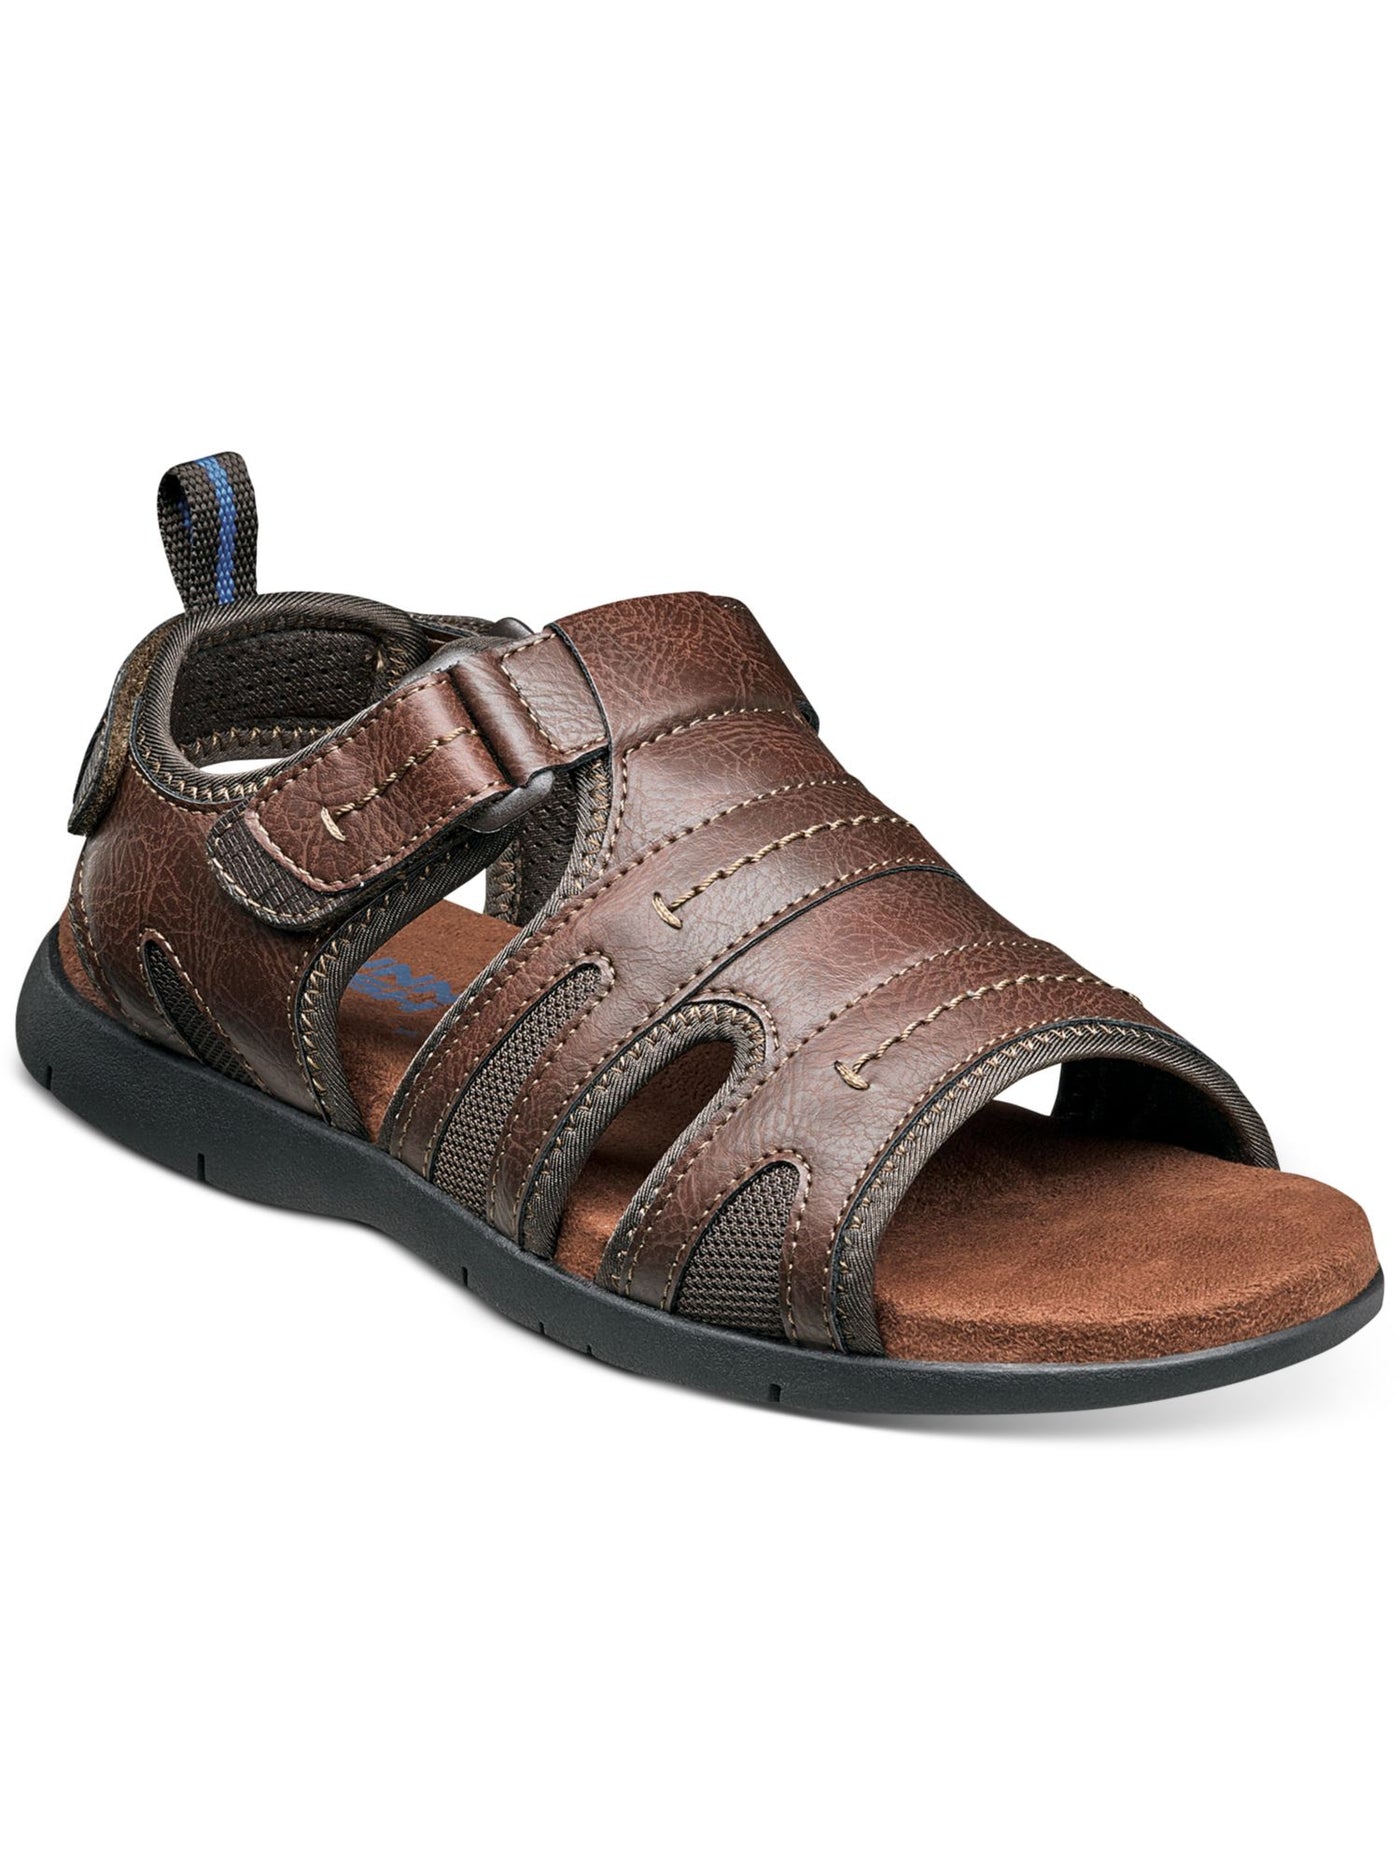 NUNN BUSH Mens Brown Cushioned Back Pull-Tab Breathable Cut Out Rio Grande Round Toe Sandals Shoes 13 M